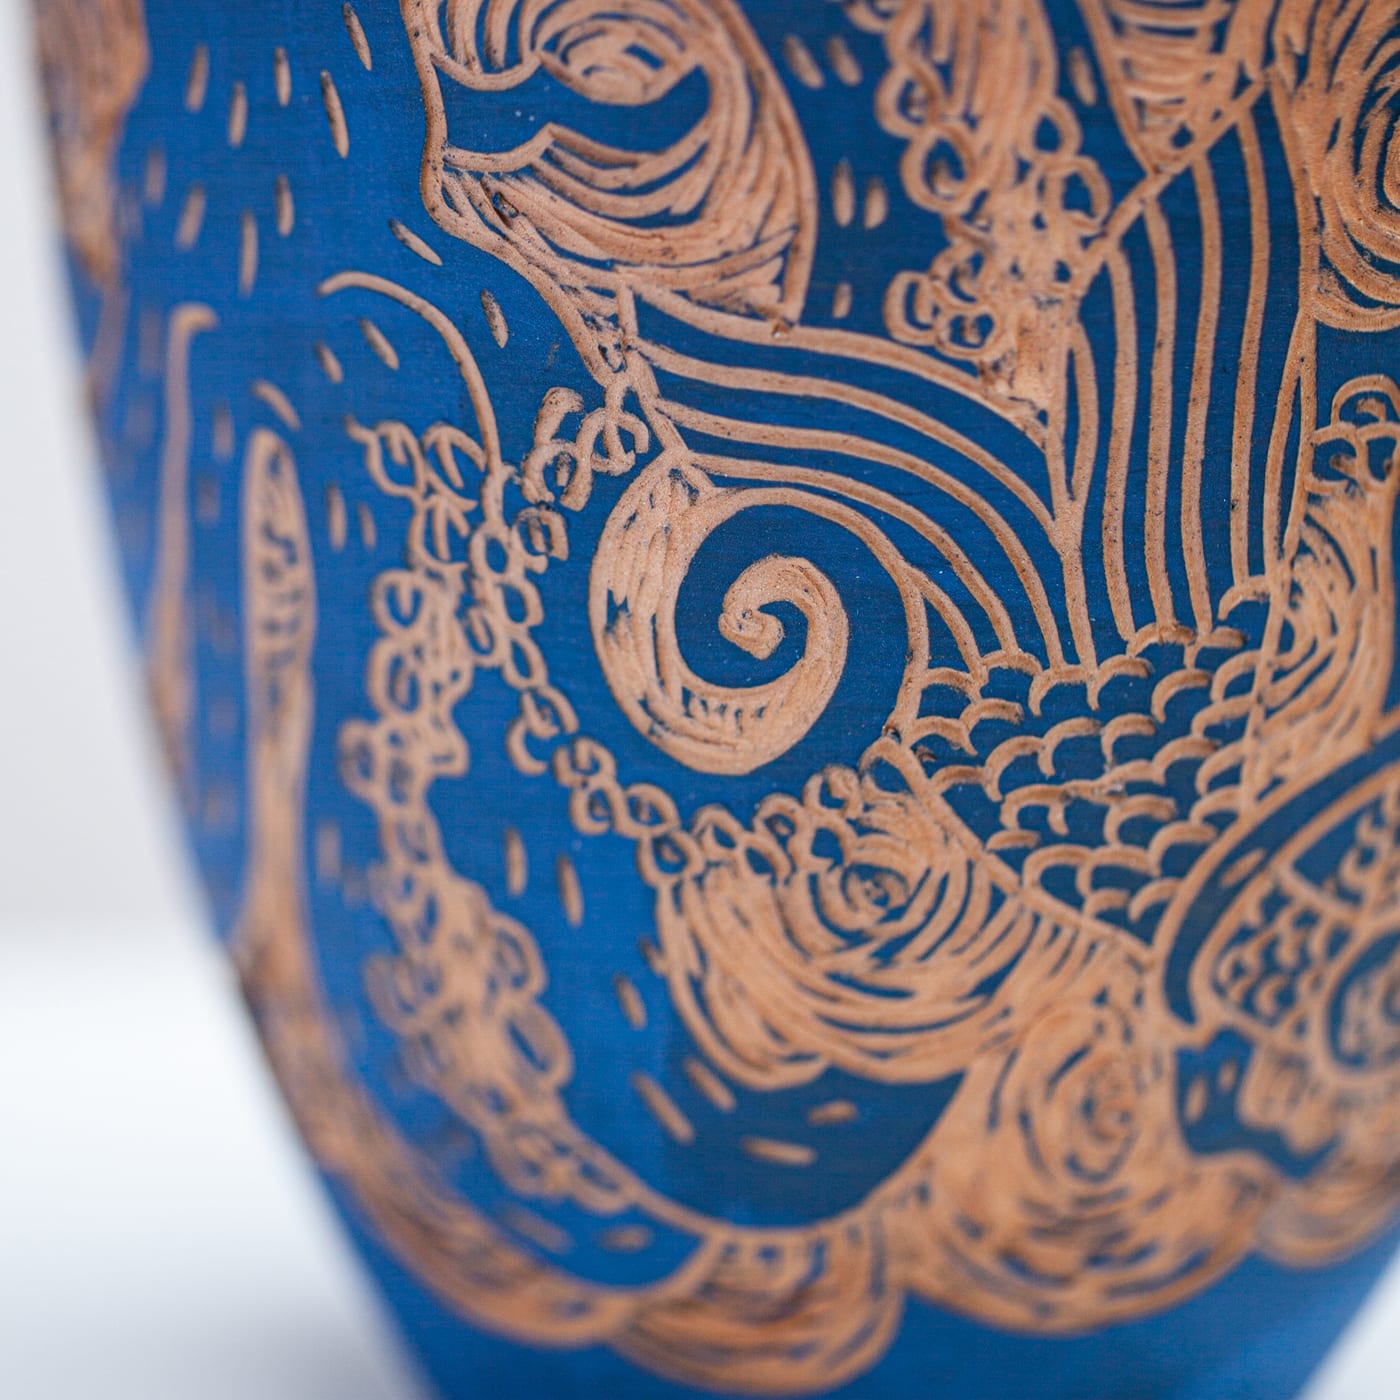 La Sirena Guerriera Blue Vase by Clara Holt and Chiara Zoppei - Clara Holt